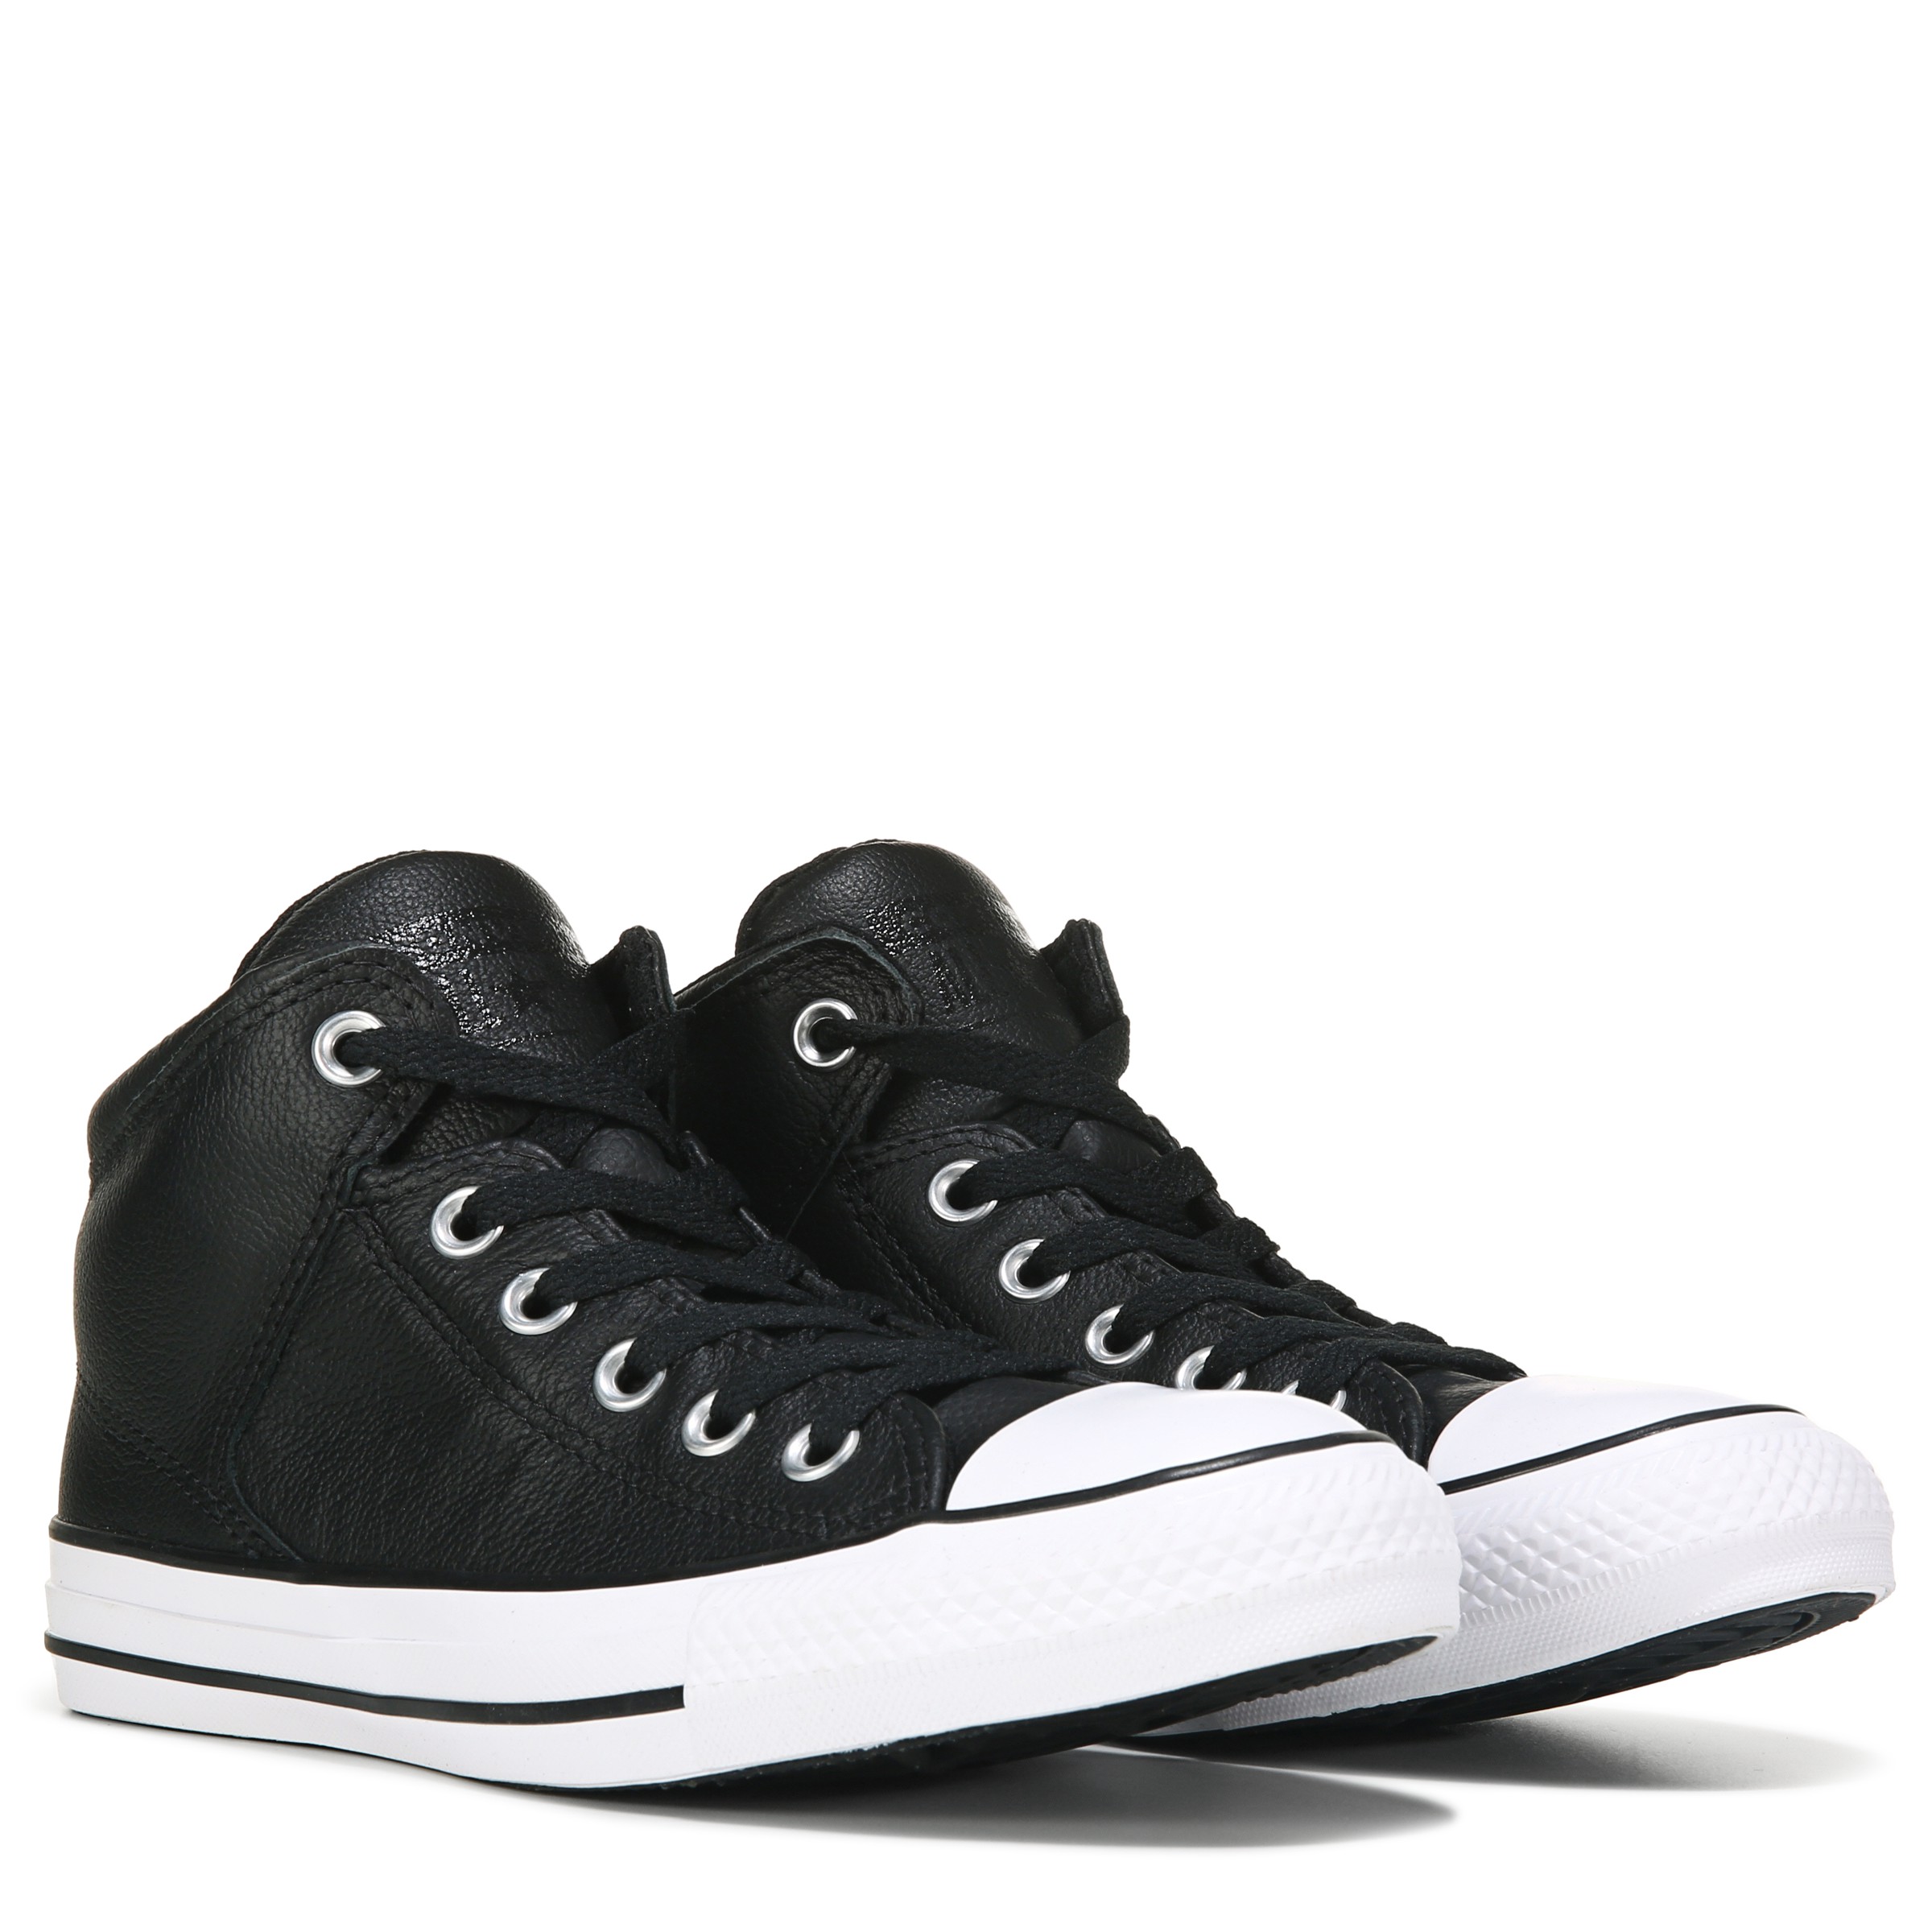 Converse Men's Chuck Taylor Hi Fashion Sneaker Leather Shoes, Black, 9